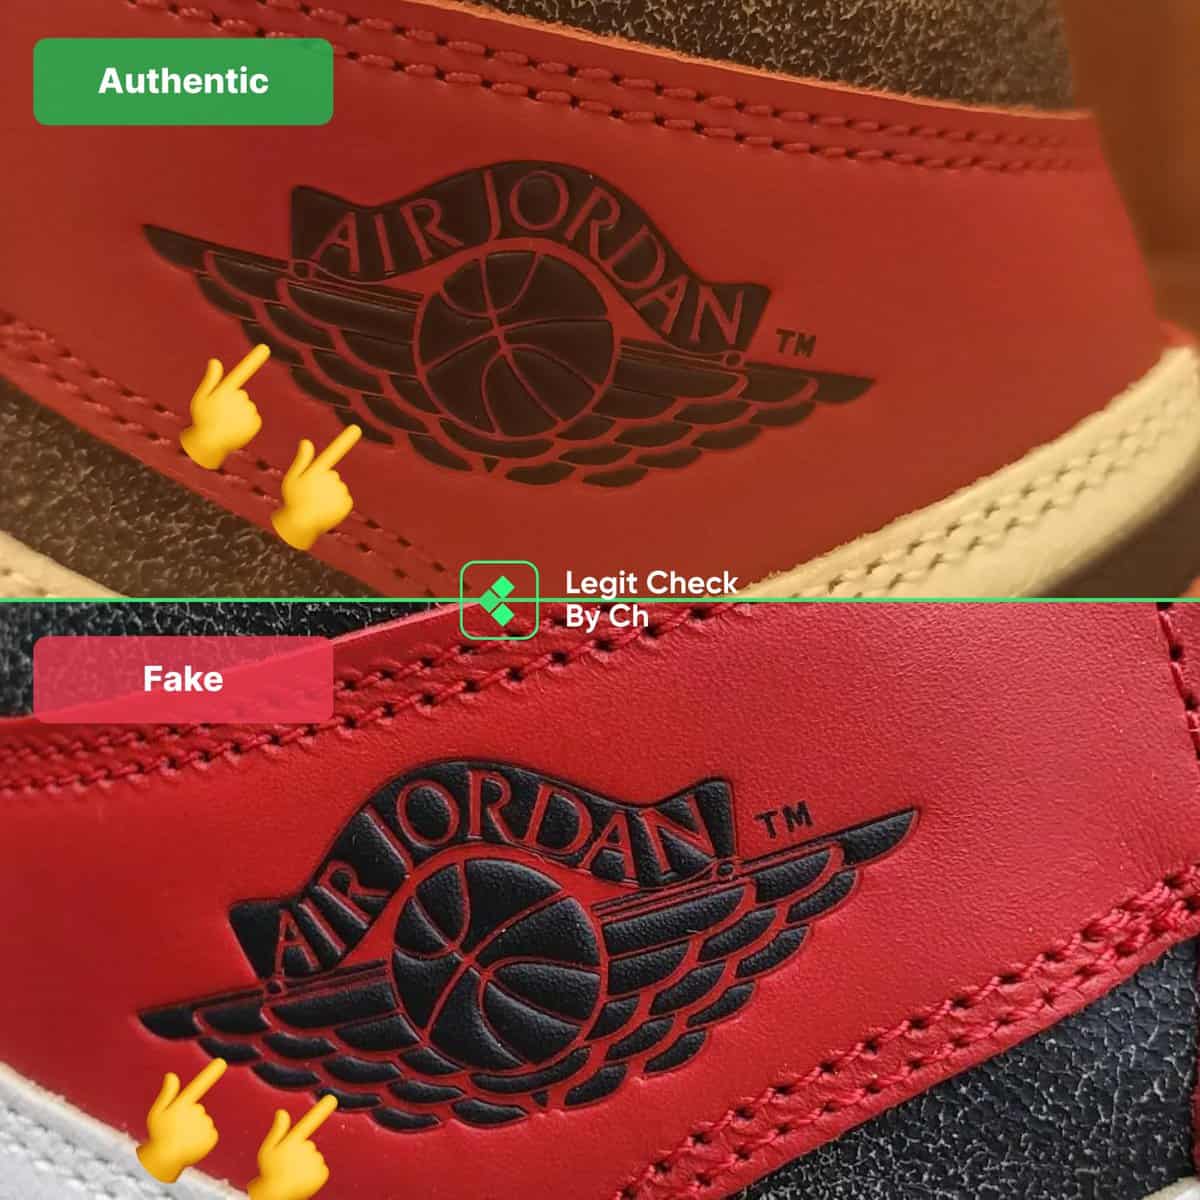 How To Spot Fake Air Jordan 1 Lost & Found - Legit Check